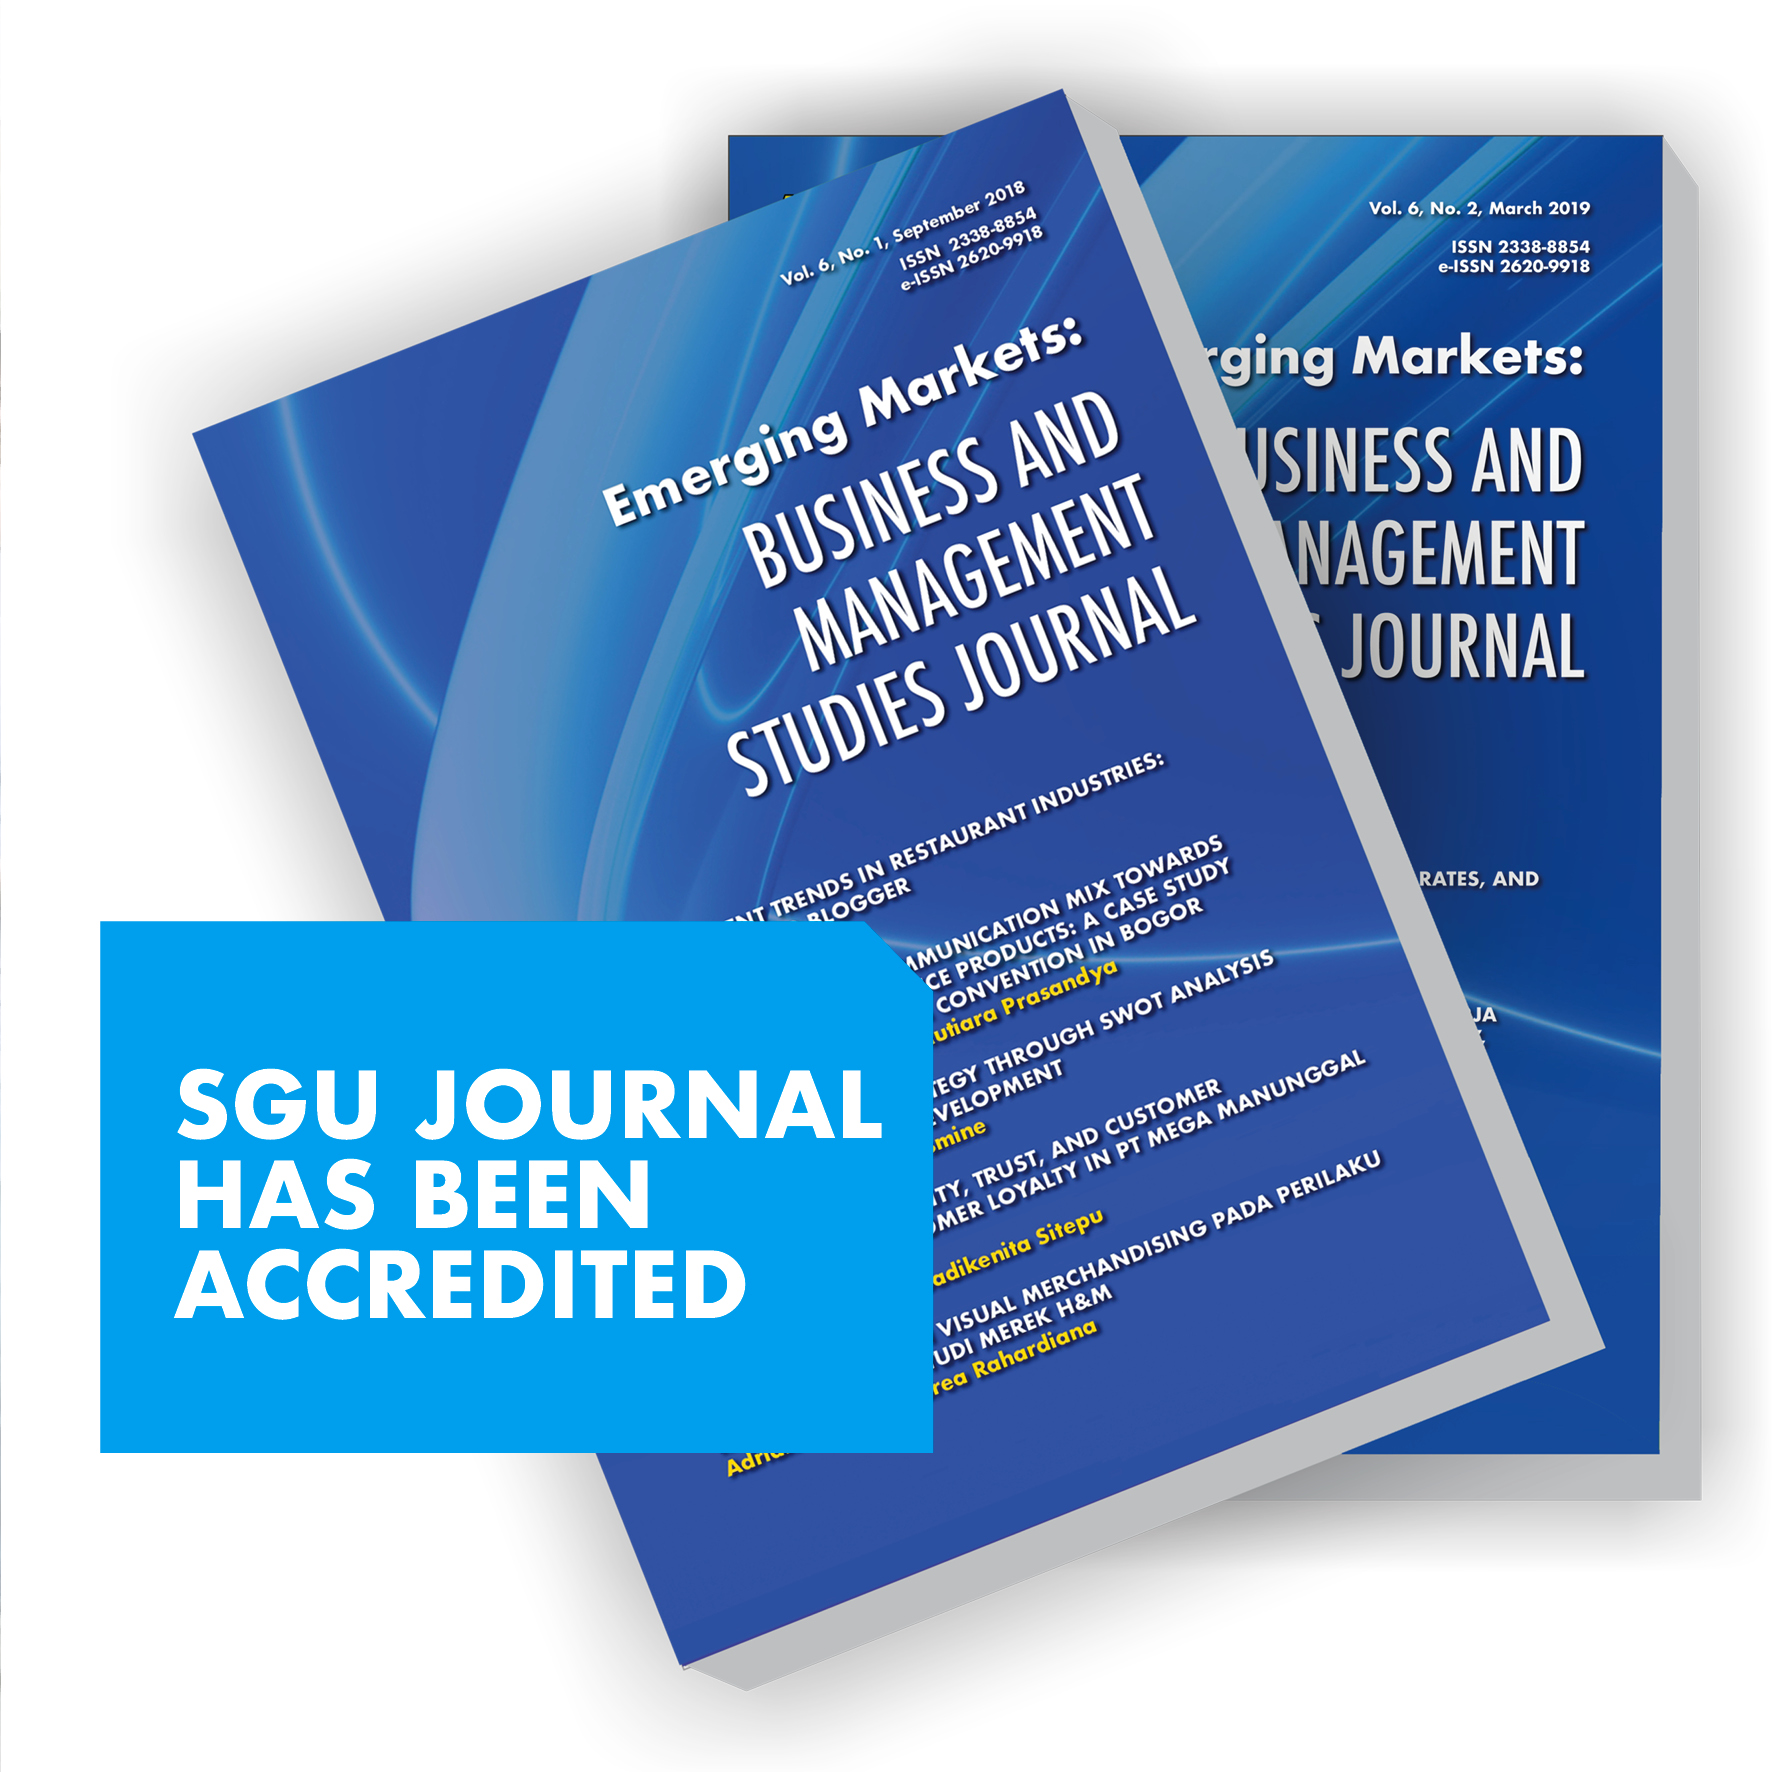 SGU Journal Has Been Accredited